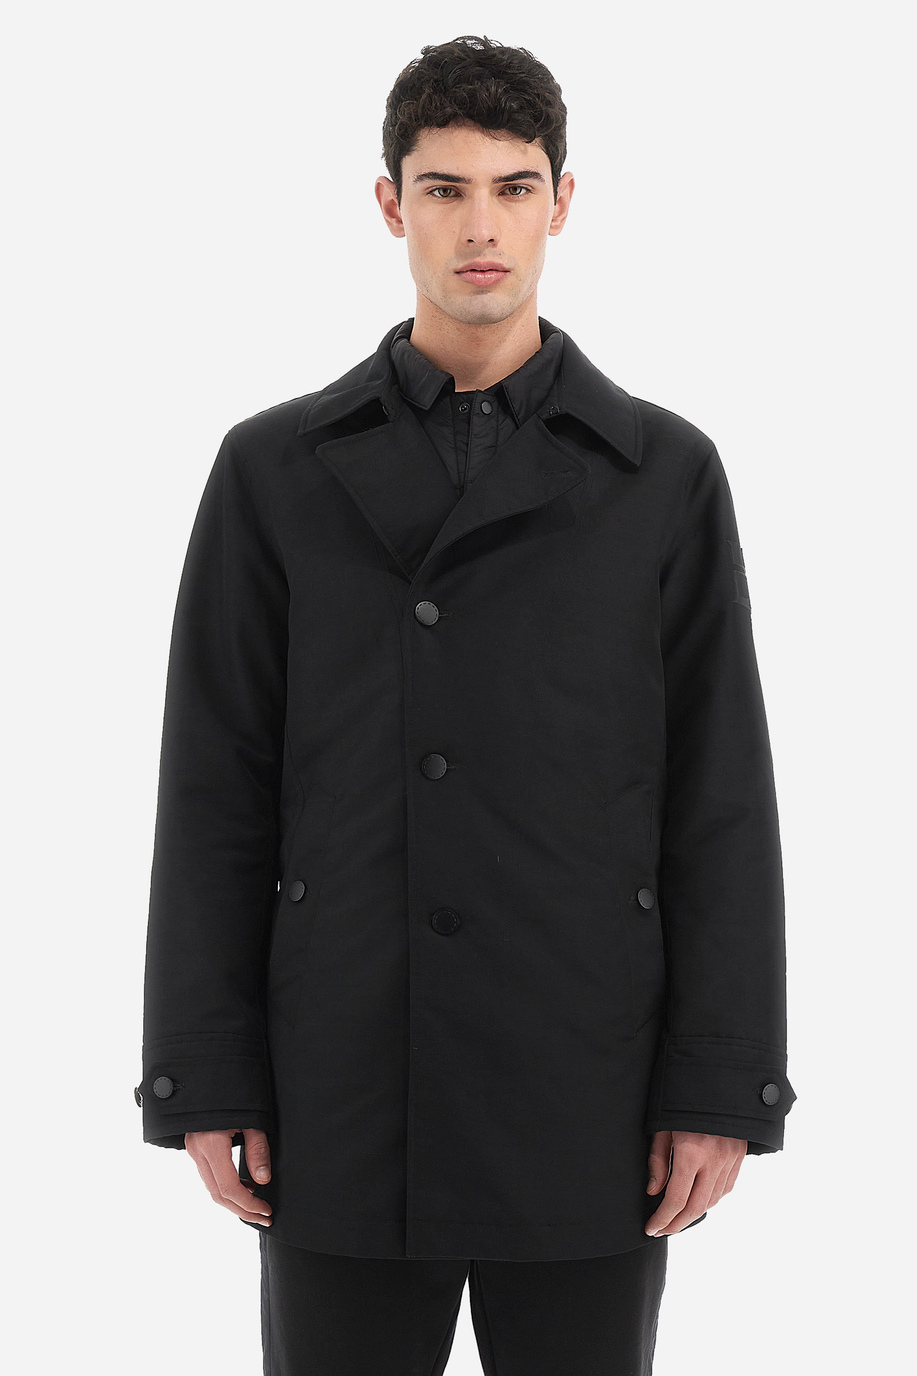 Outdoor giacca uomo regular fit - Welborn - Antipioggia & Antivento | La Martina - Official Online Shop